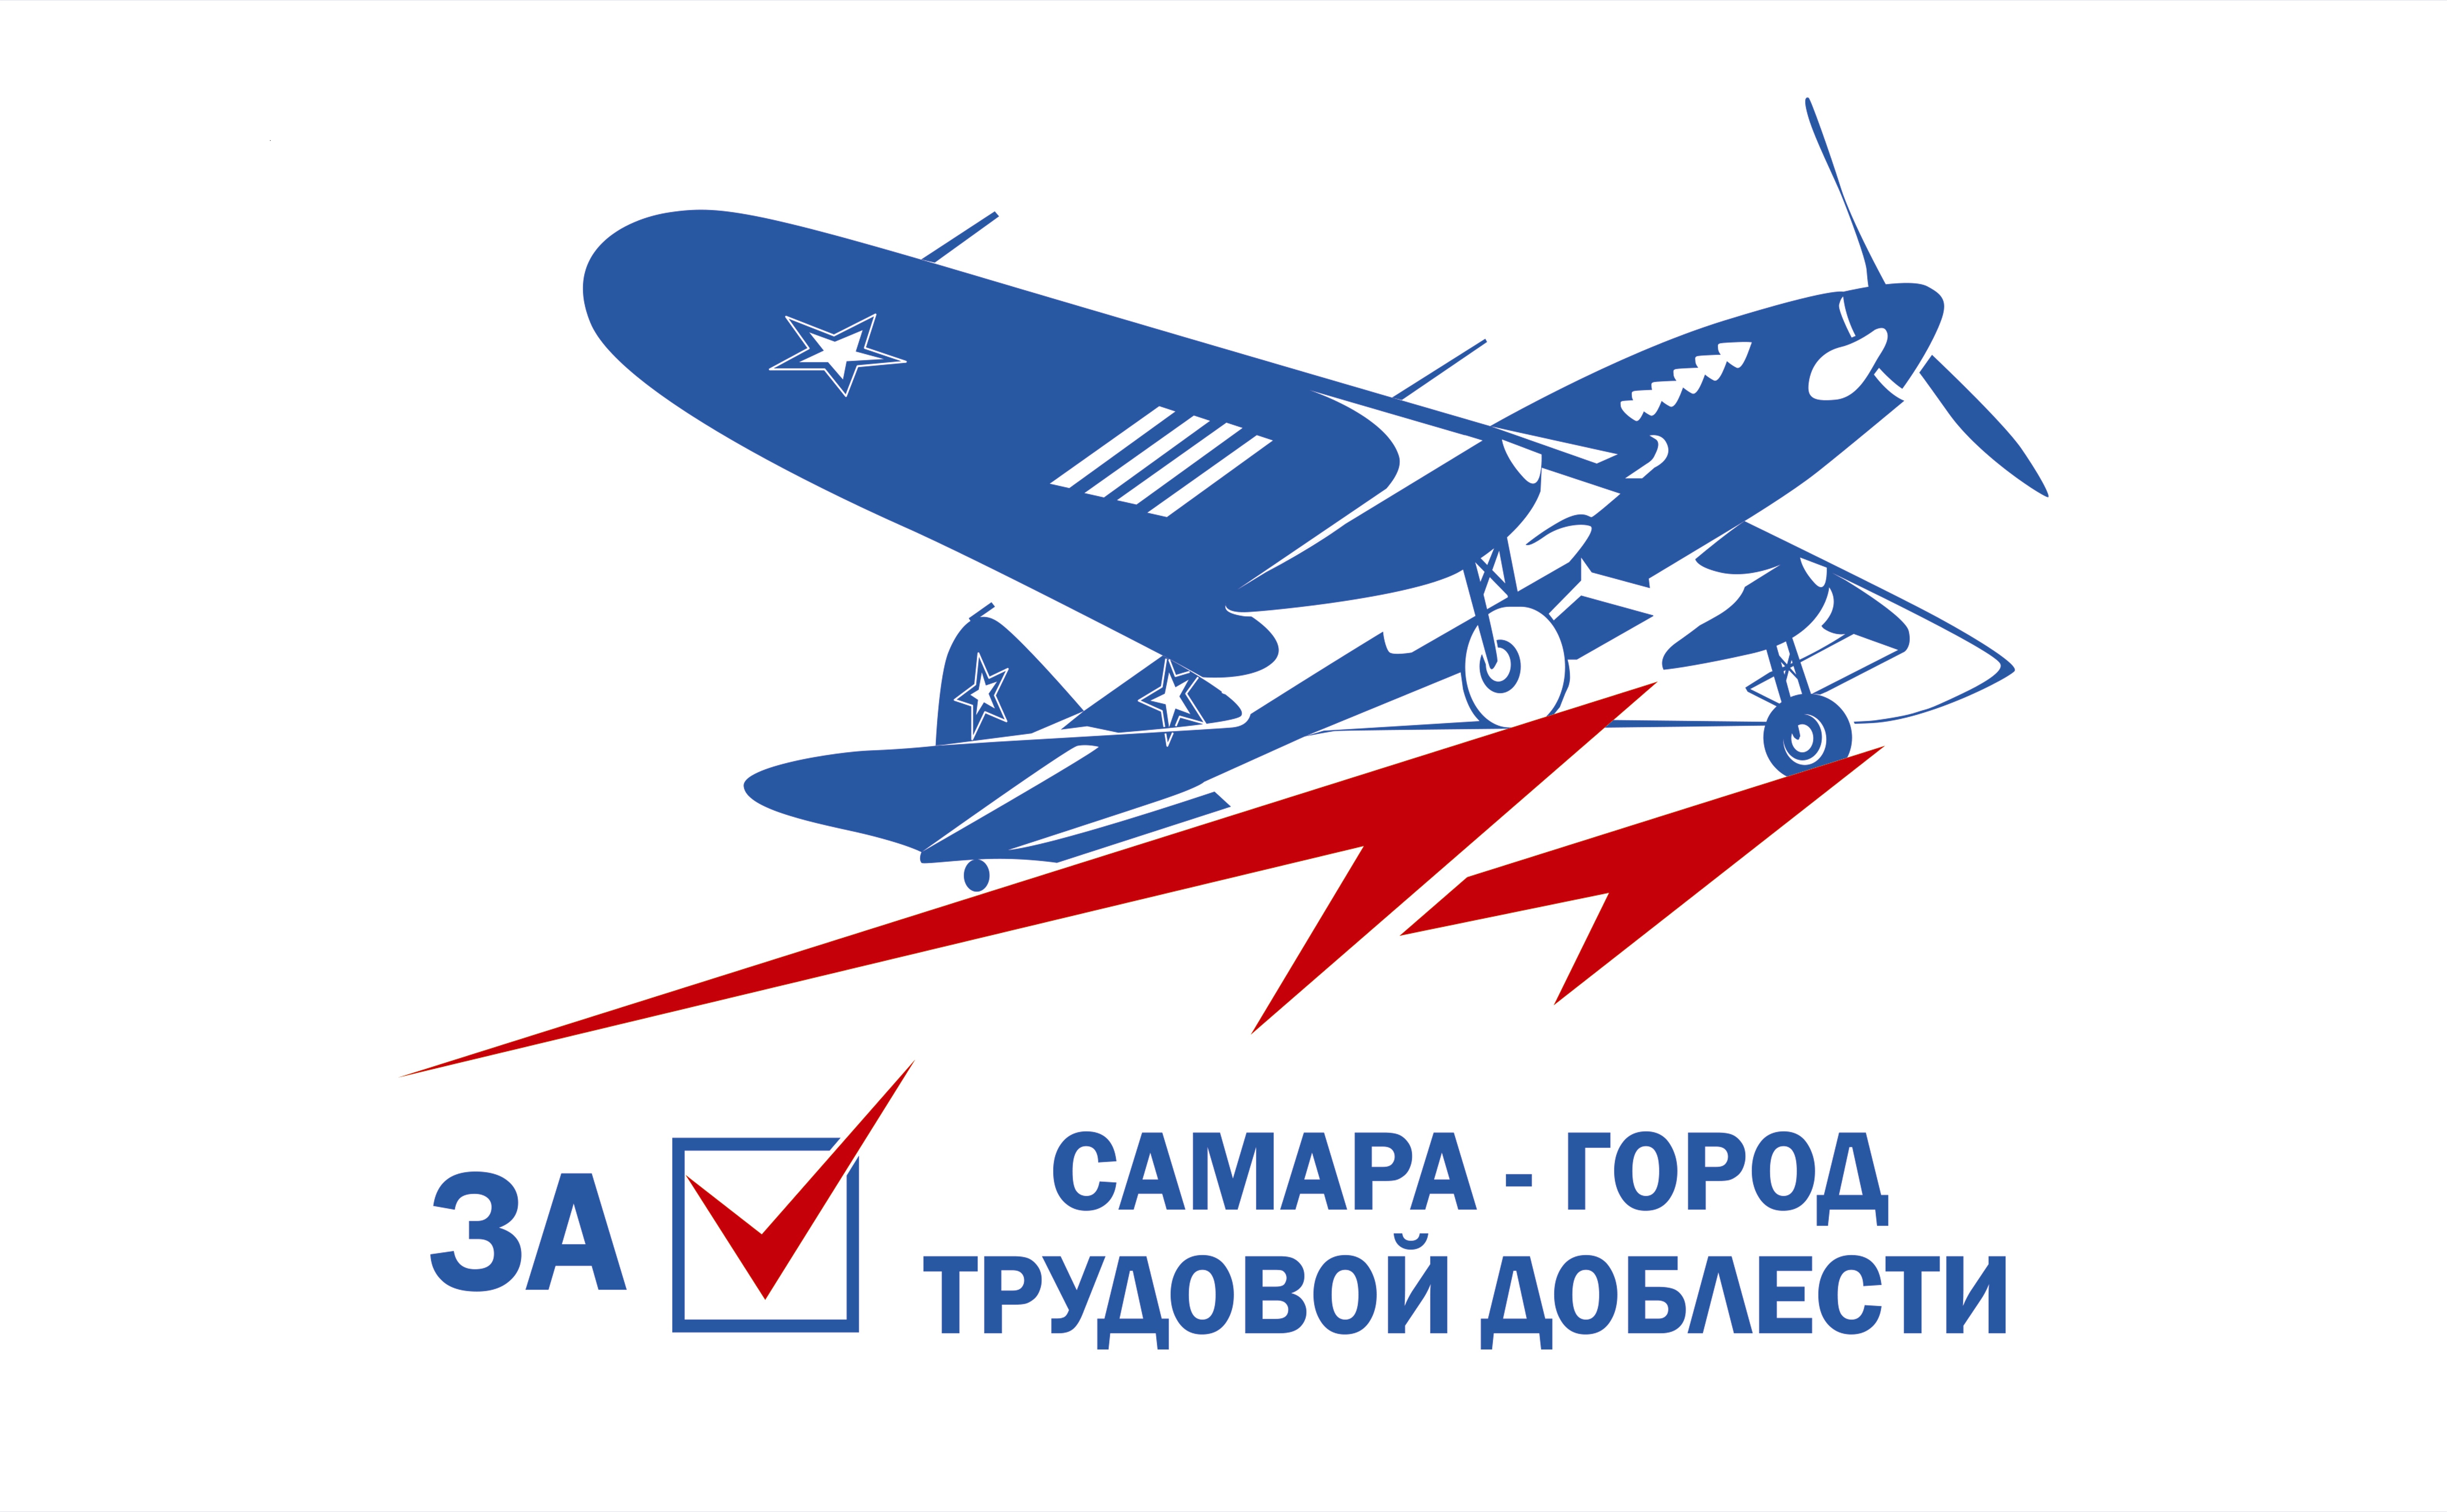 Лого самолета